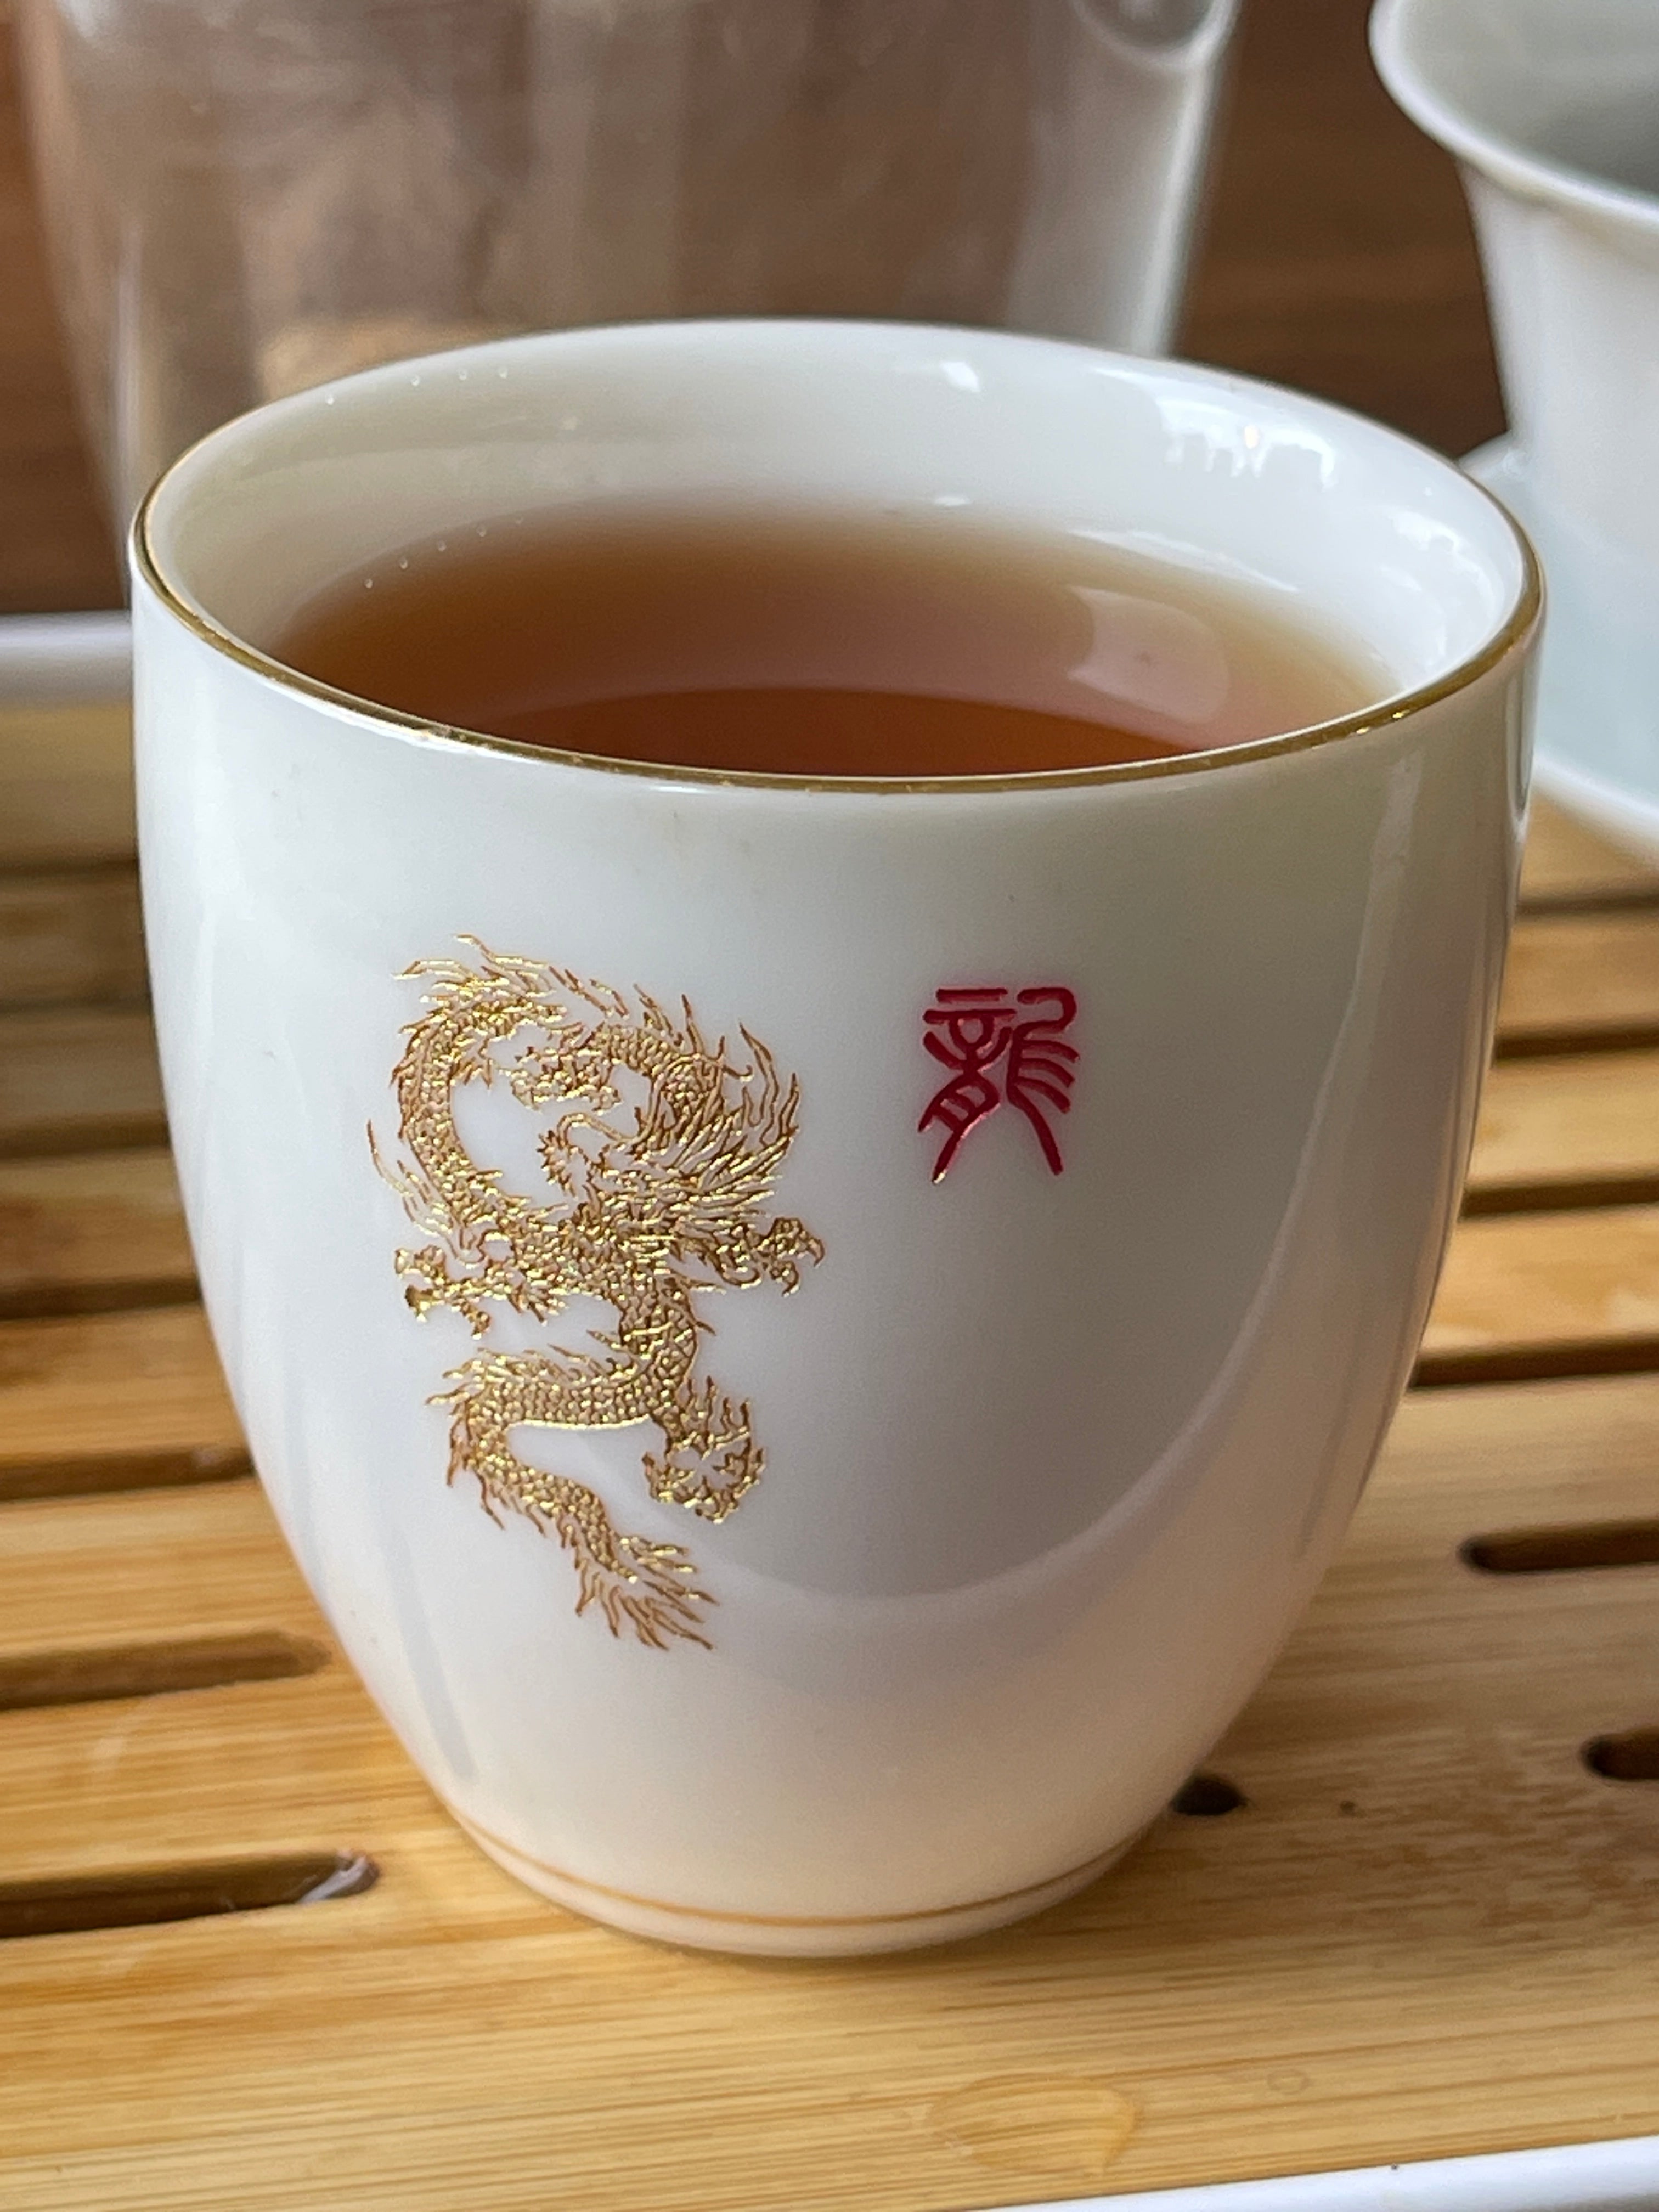 2011 Fuding Aged White Tea